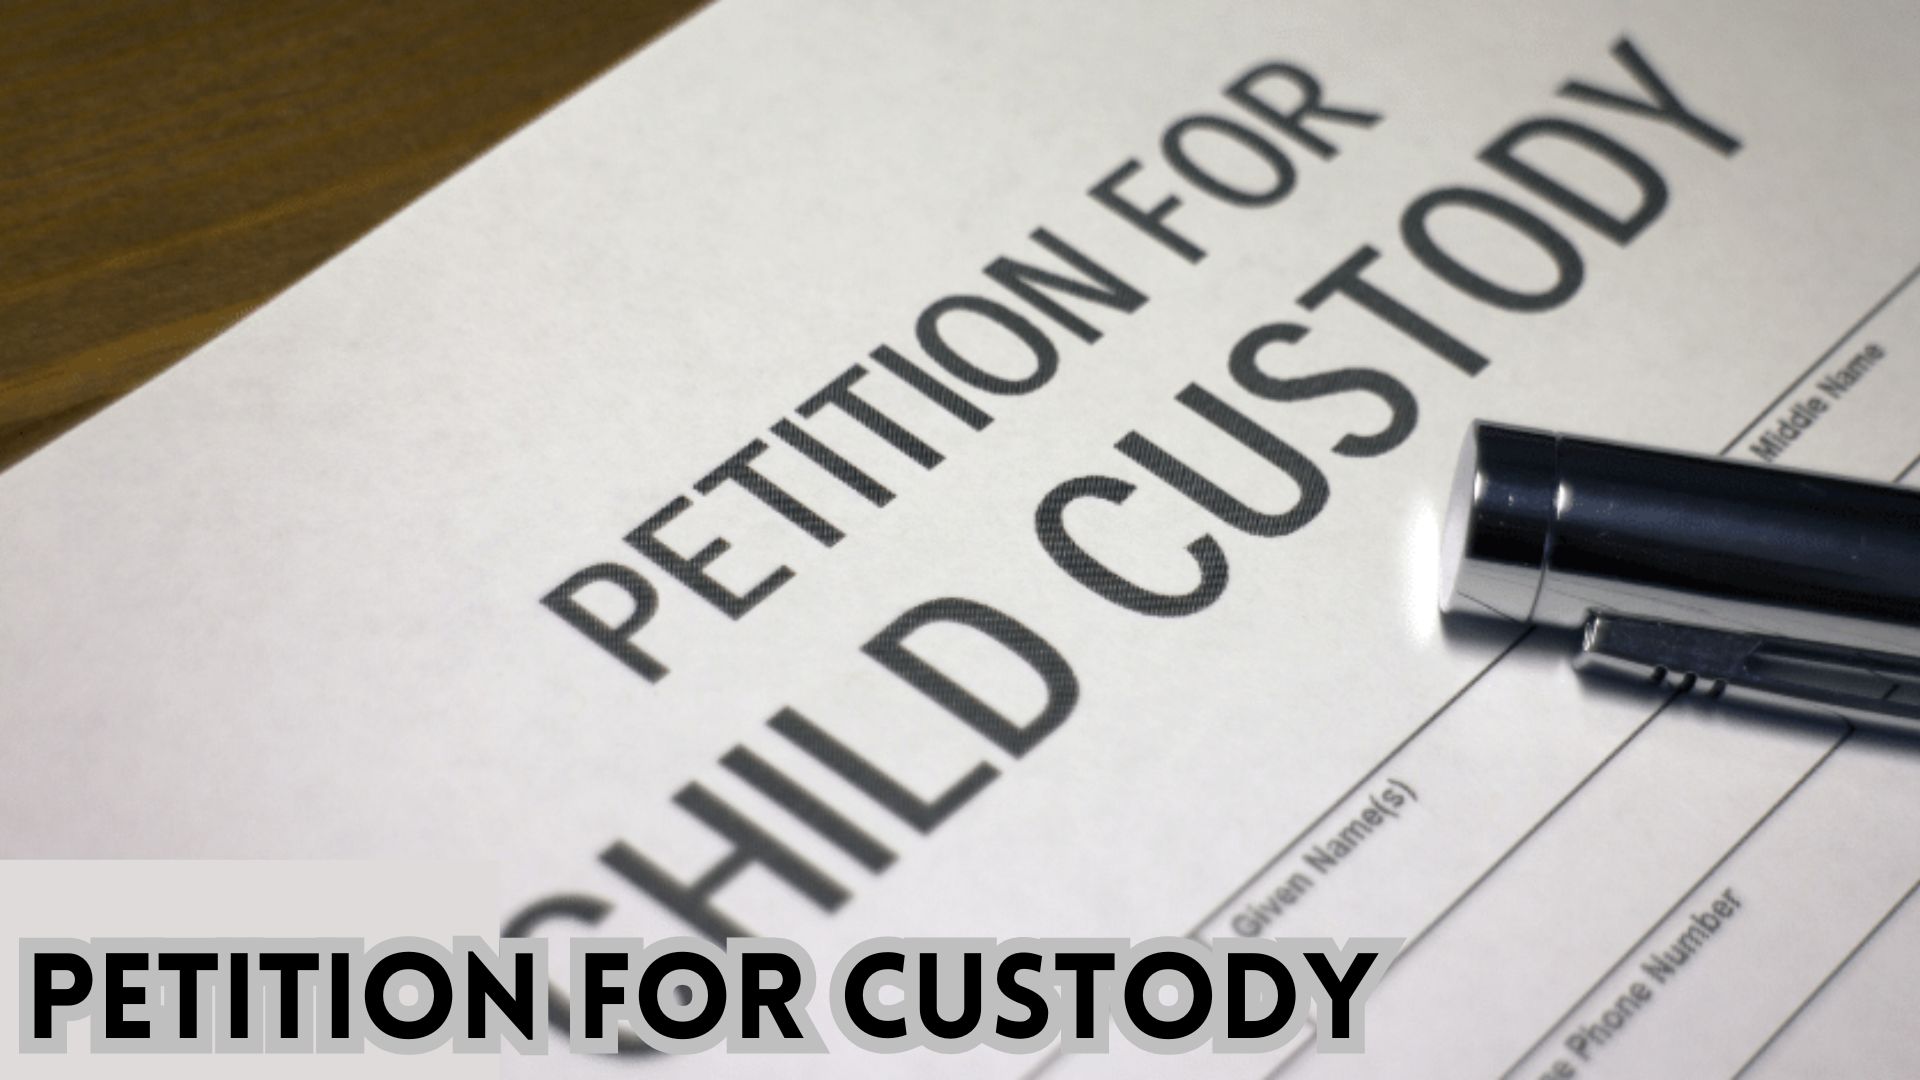 Petition for Custody.